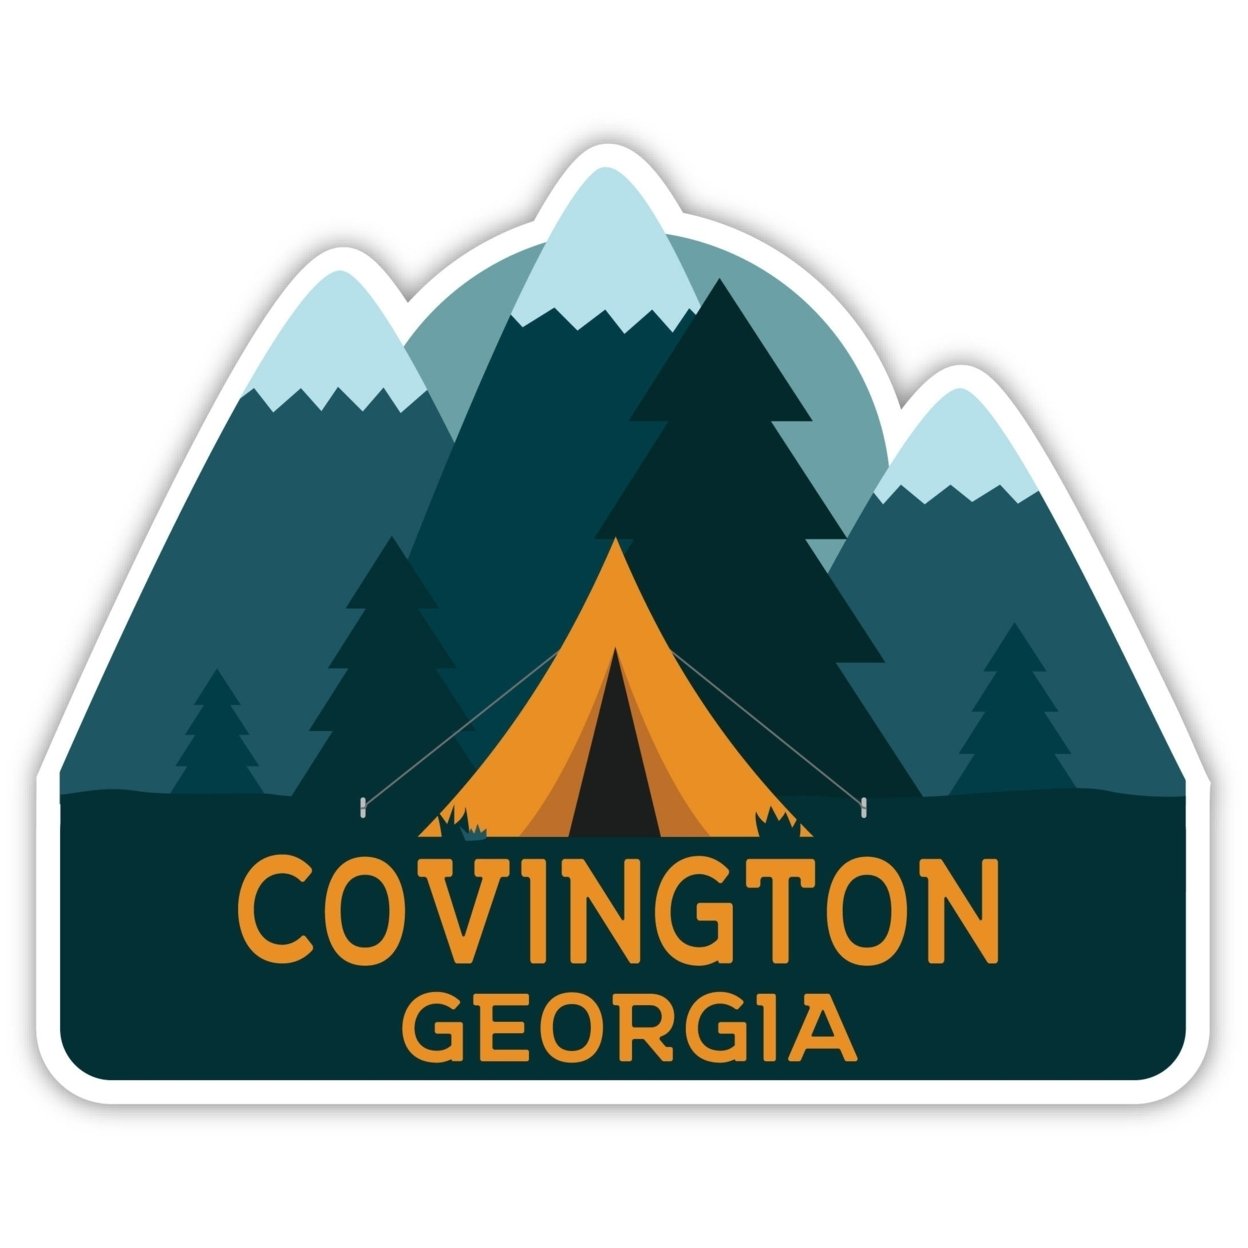 Covington Georgia Souvenir Decorative Stickers (Choose Theme And Size) - 4-Pack, 4-Inch, Tent